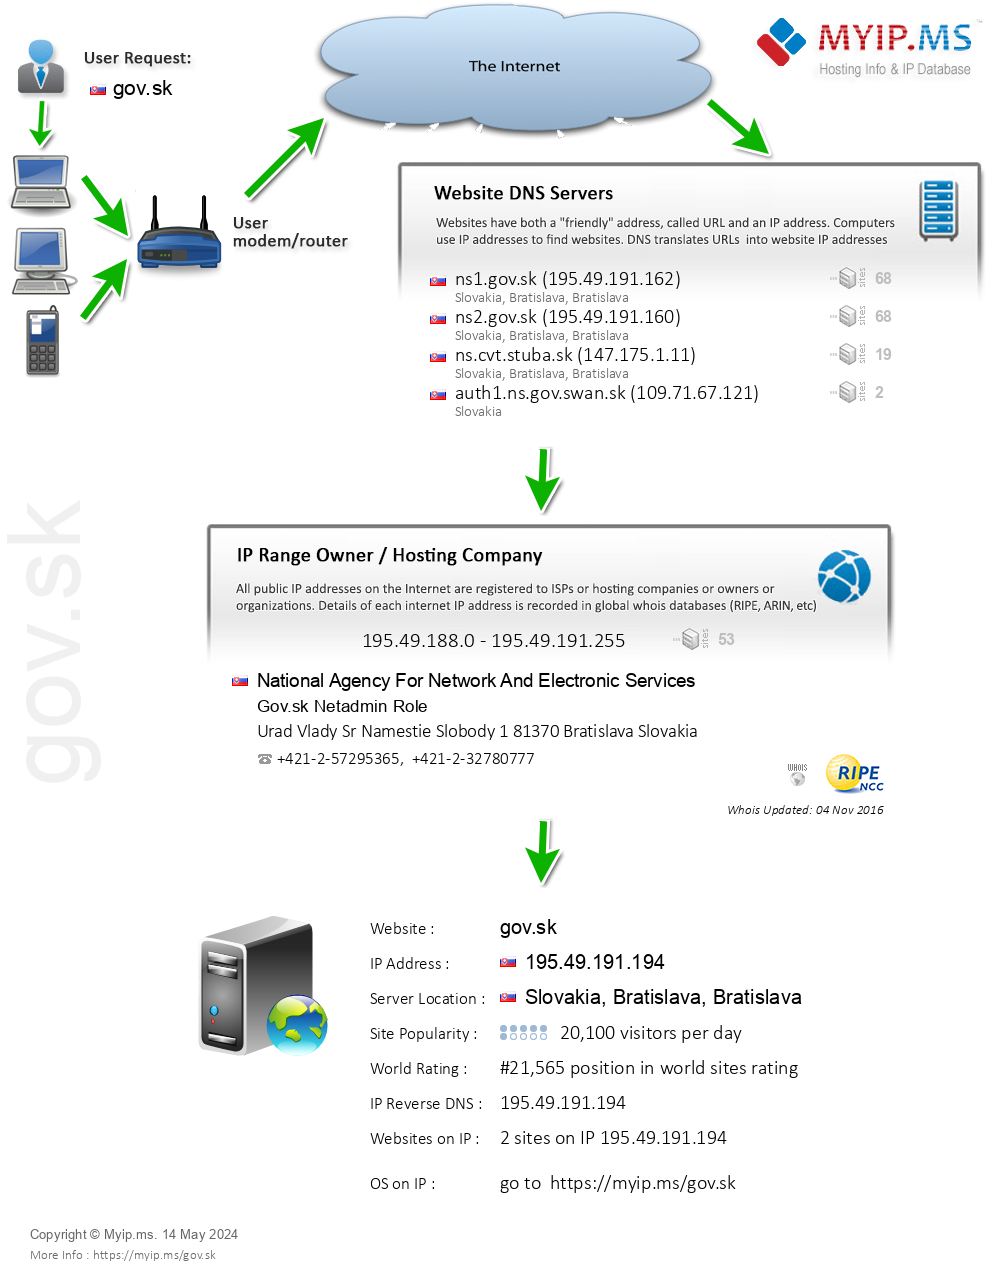 Gov.sk - Website Hosting Visual IP Diagram